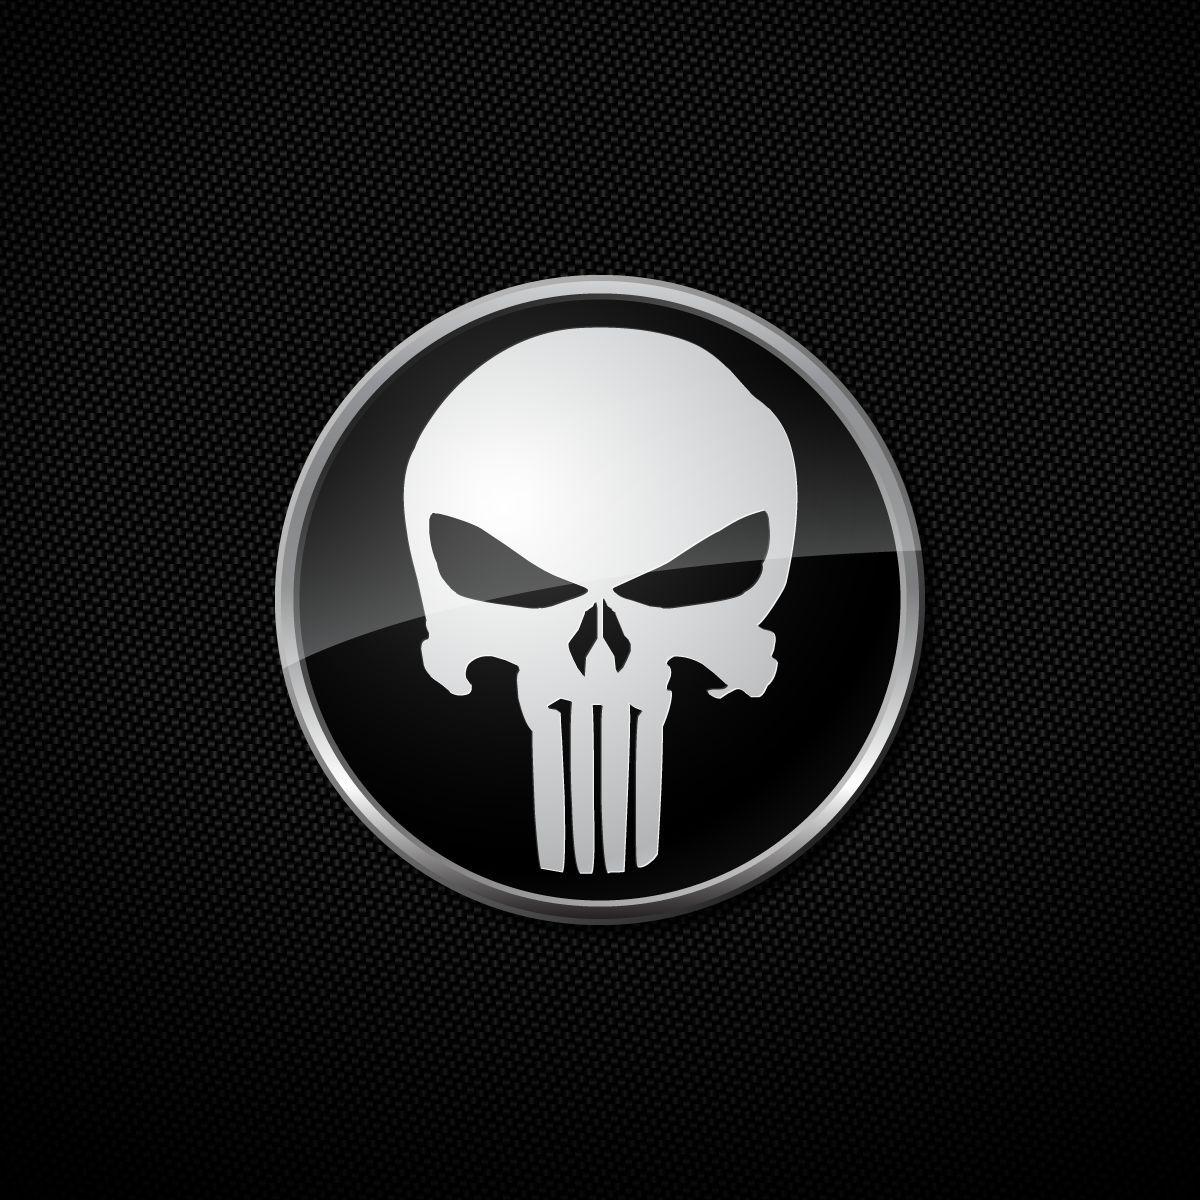 Player Punisher37-M avatar